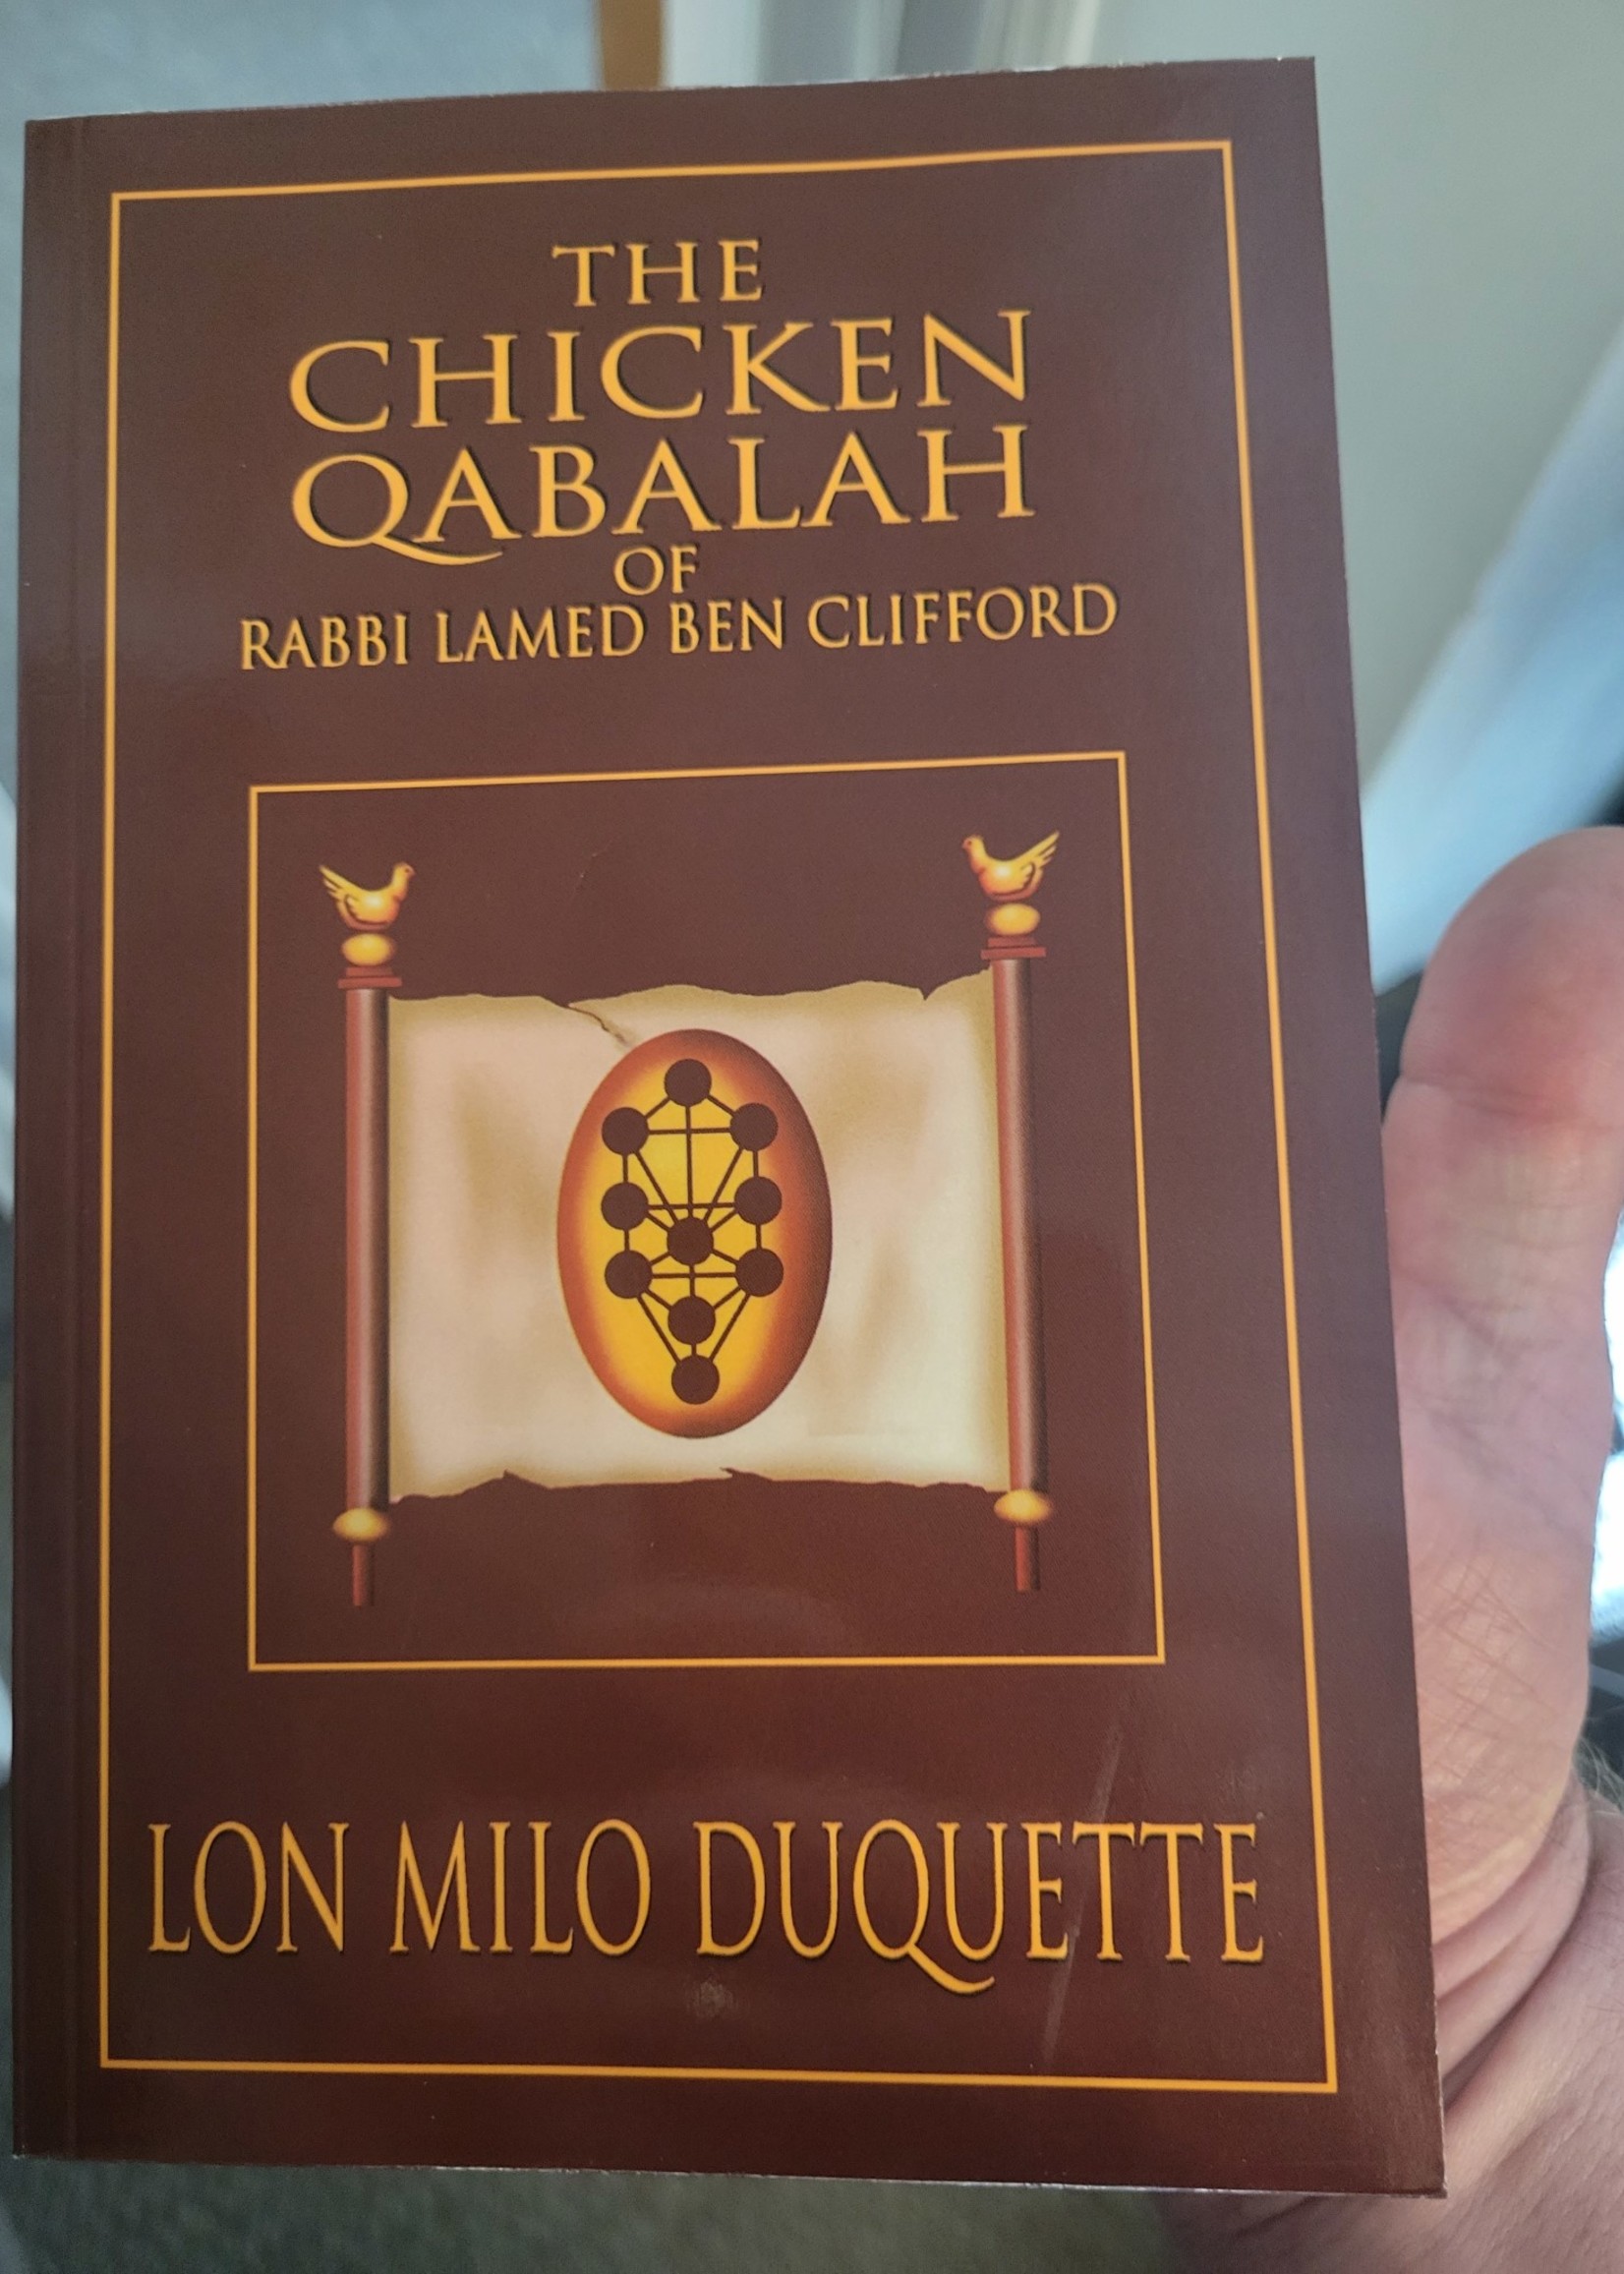 The Chicken Qabalah of Rabbi Lamed Ben Clifford - Lon Milo DuQuette